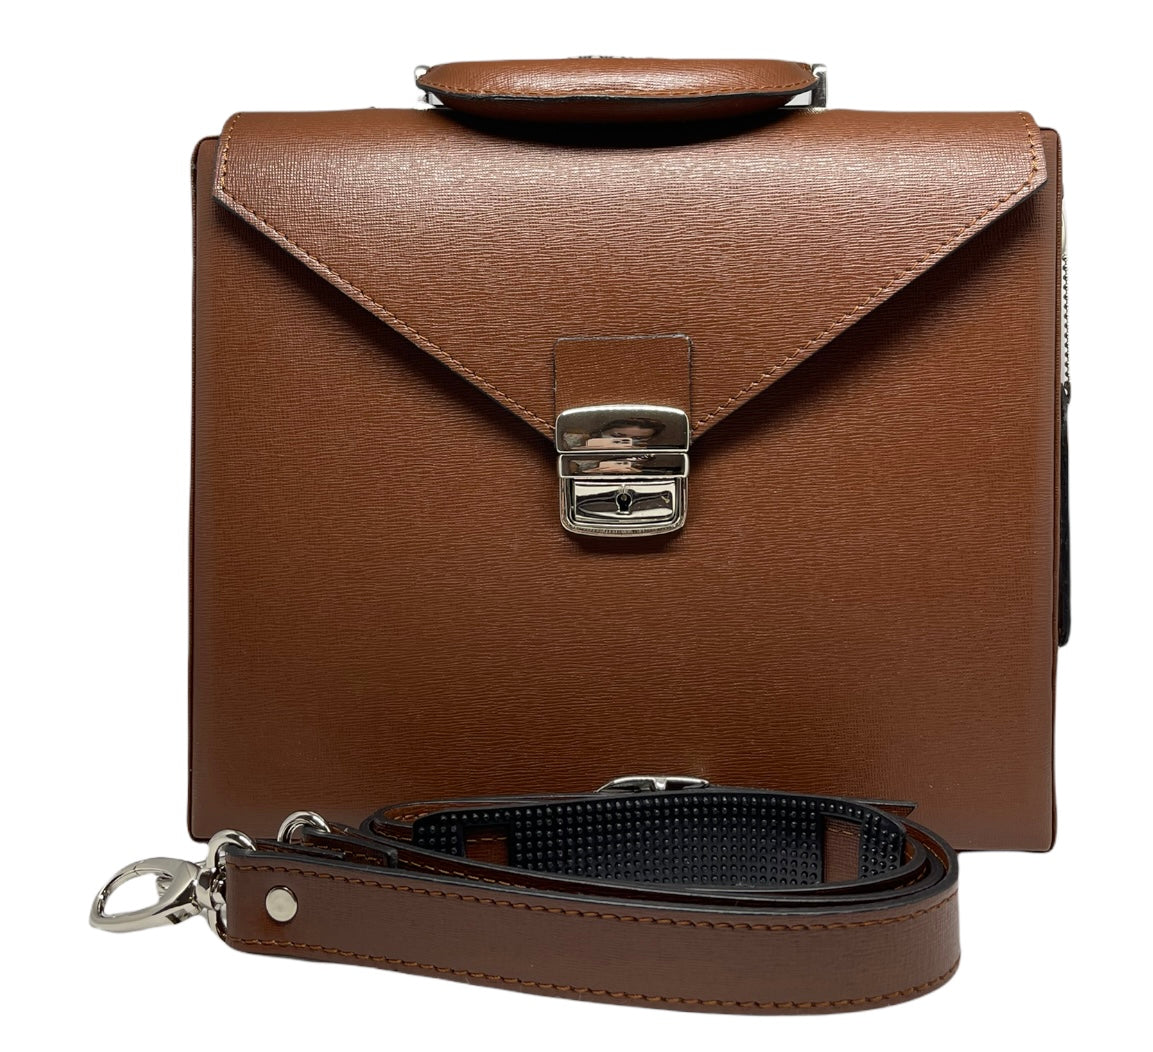 Elegant Briefcase BIG, BROWN, leather with locks and shoulder strap